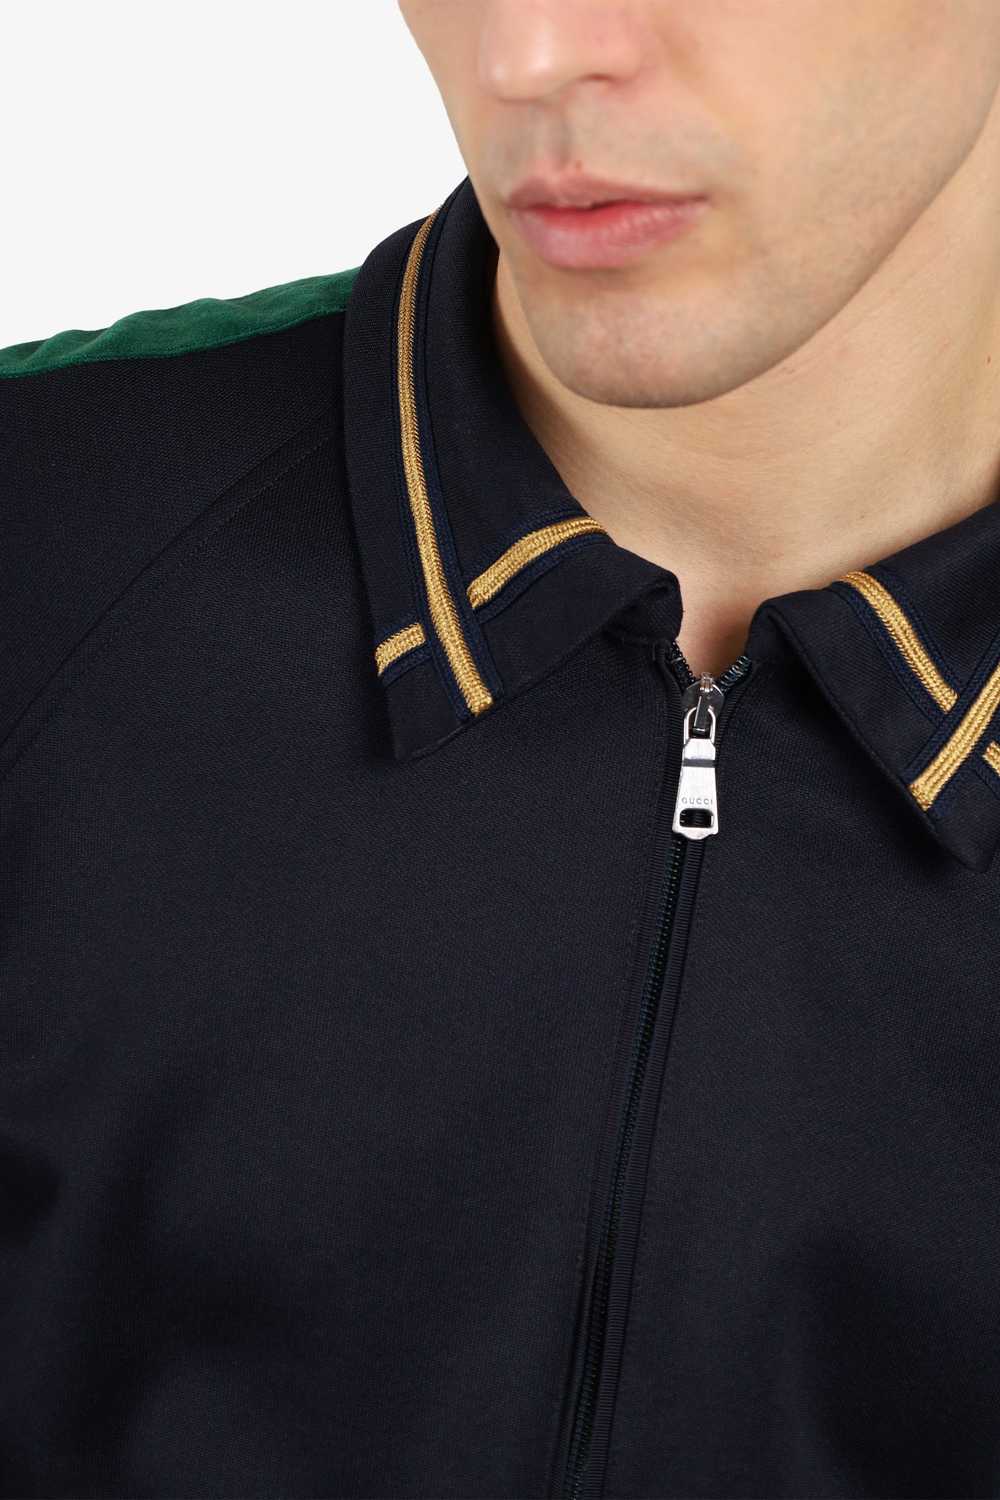 Gucci Black Jersey/Green Velvet Zip-Up Jacket Wit… - image 4